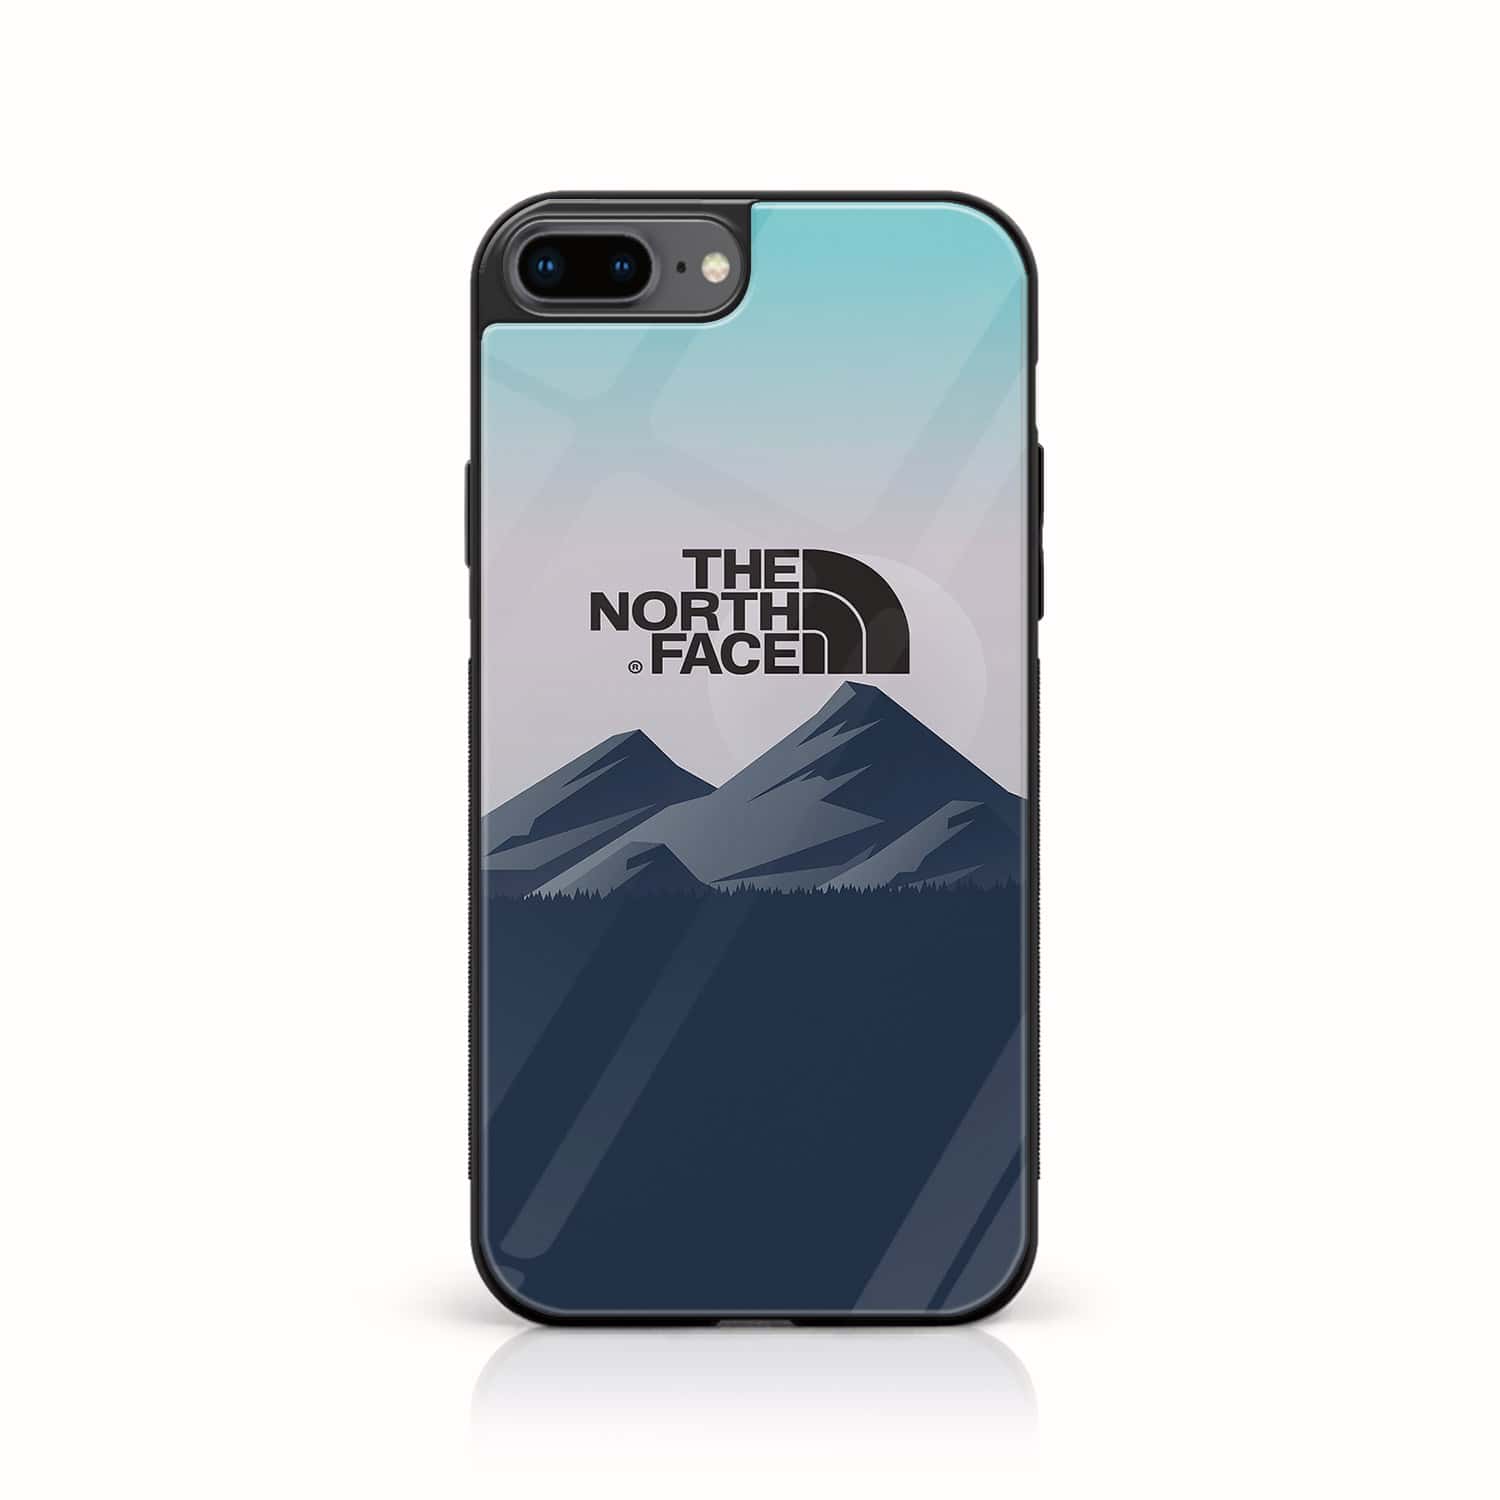 iPhone 7 Plus - The North Face Series - Premium Printed Glass soft Bumper shock Proof Case